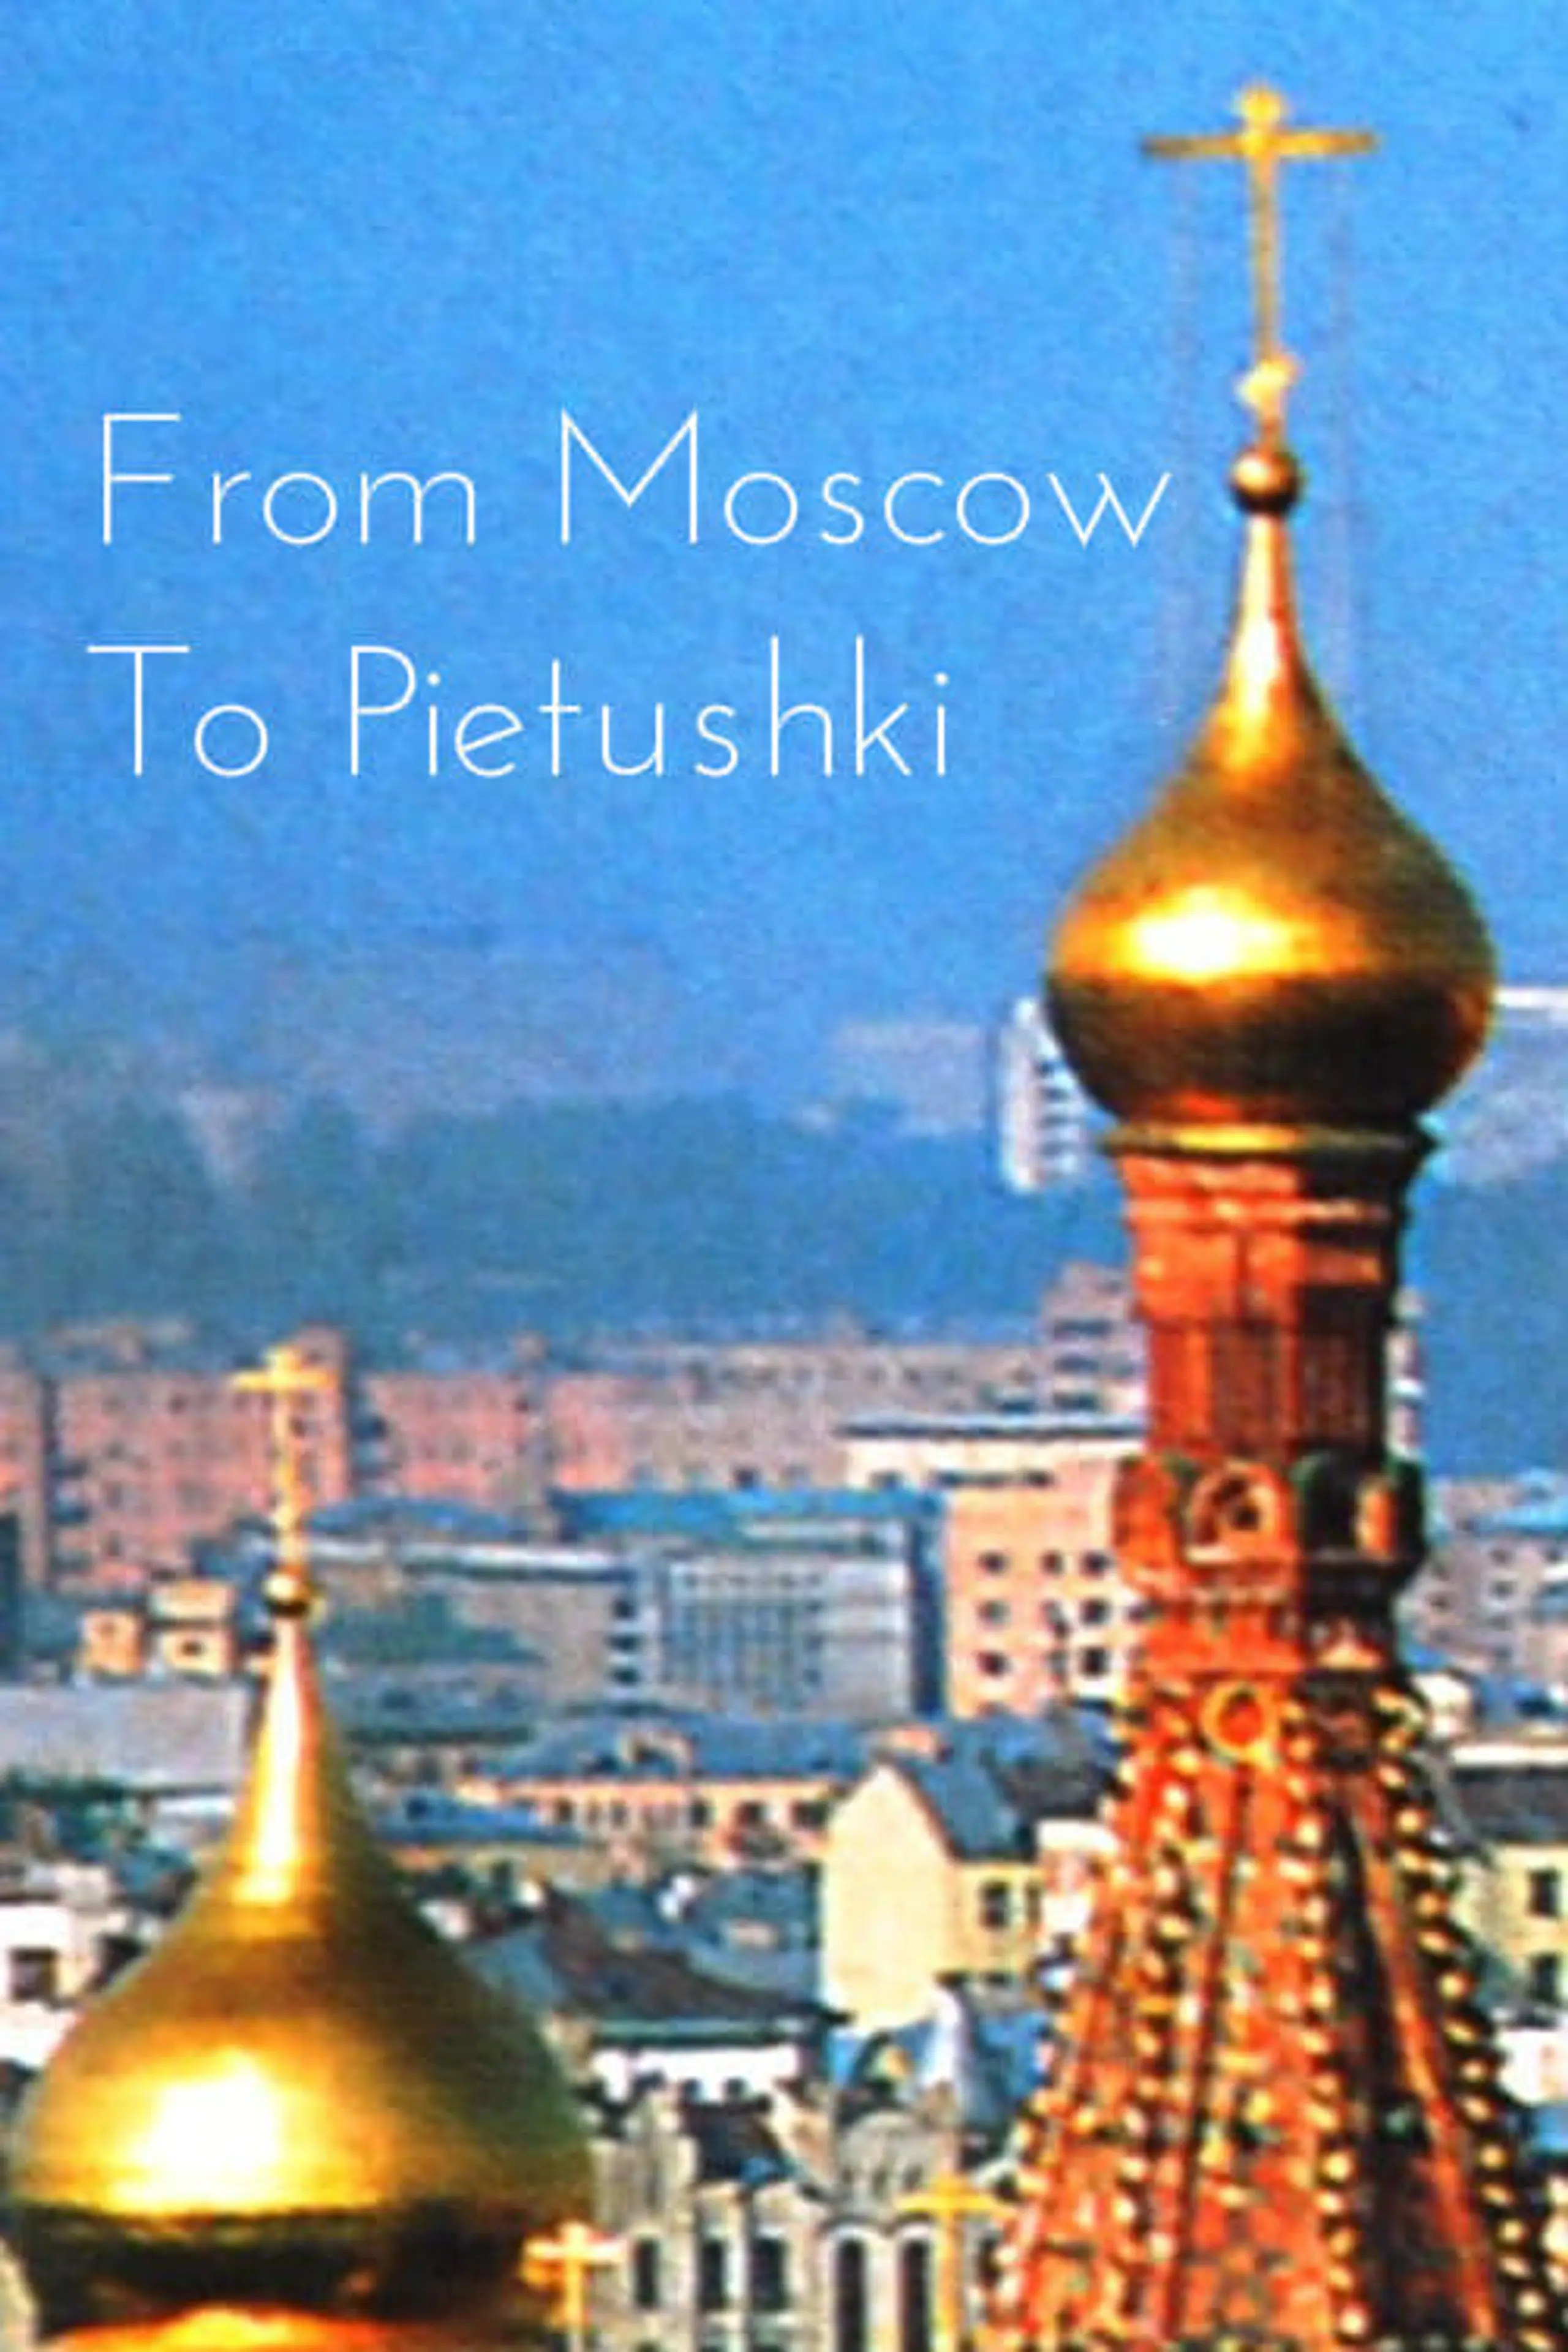 From Moscow to Pietushki